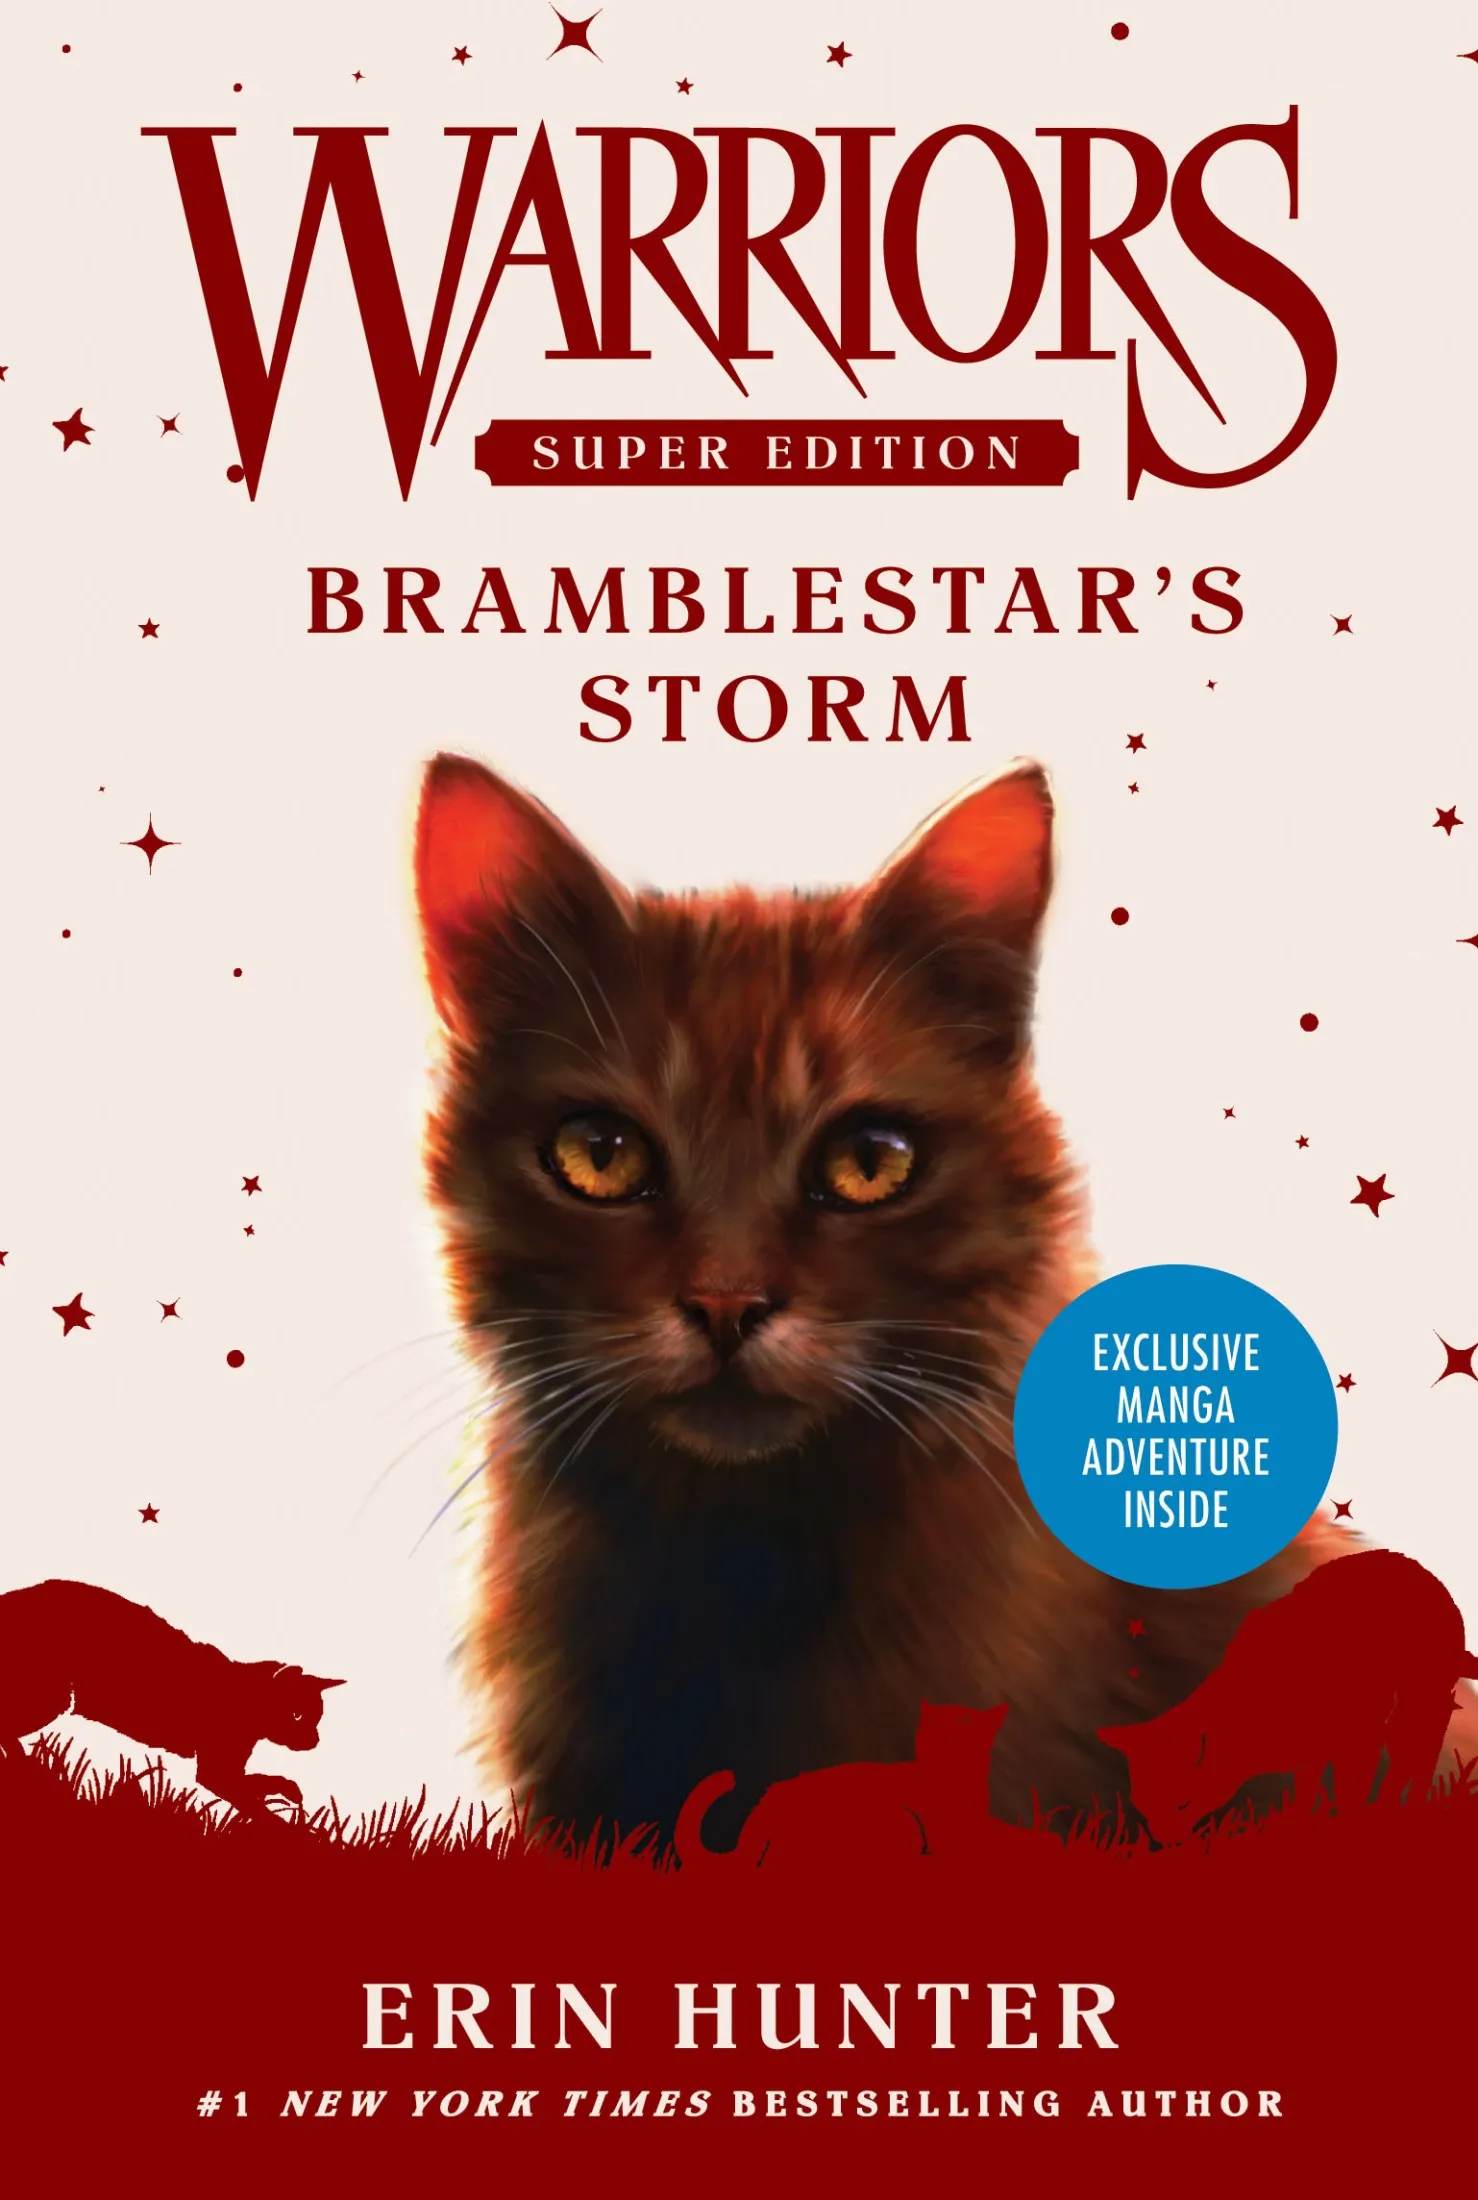 Bramblestar's Storm (Warriors: Super Edition #7)